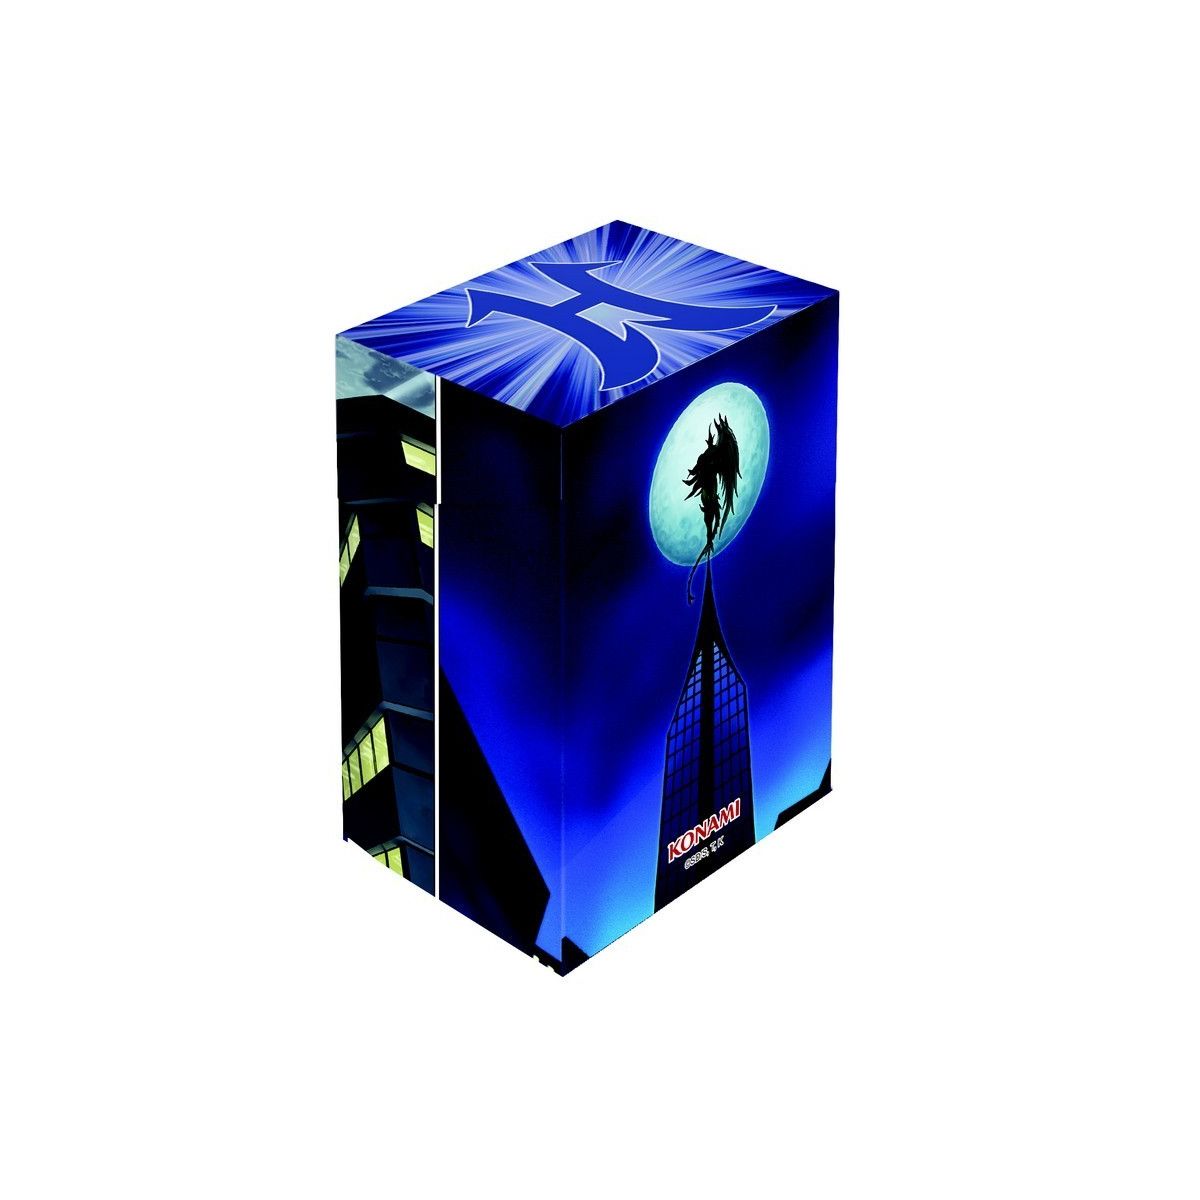 Yu Gi Oh! - Deck Box - Elemental Hero Card Case